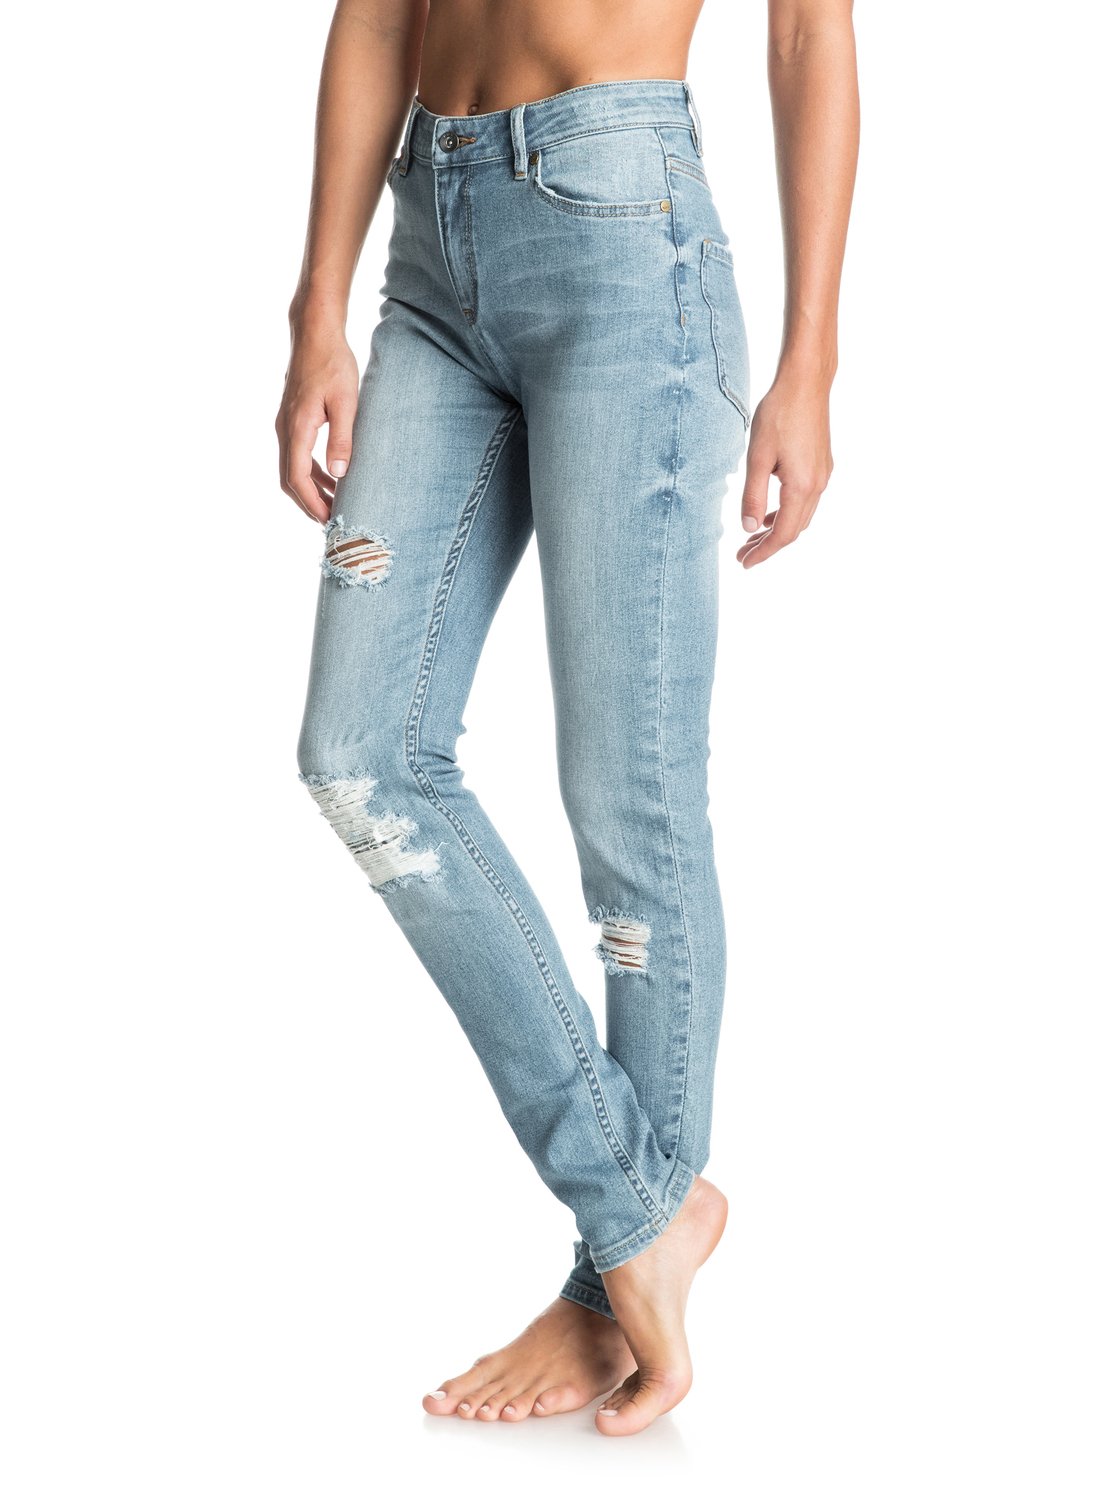 Suntrippers High Waisted Distressed Skinny Jeans ERJDP03132 | Roxy